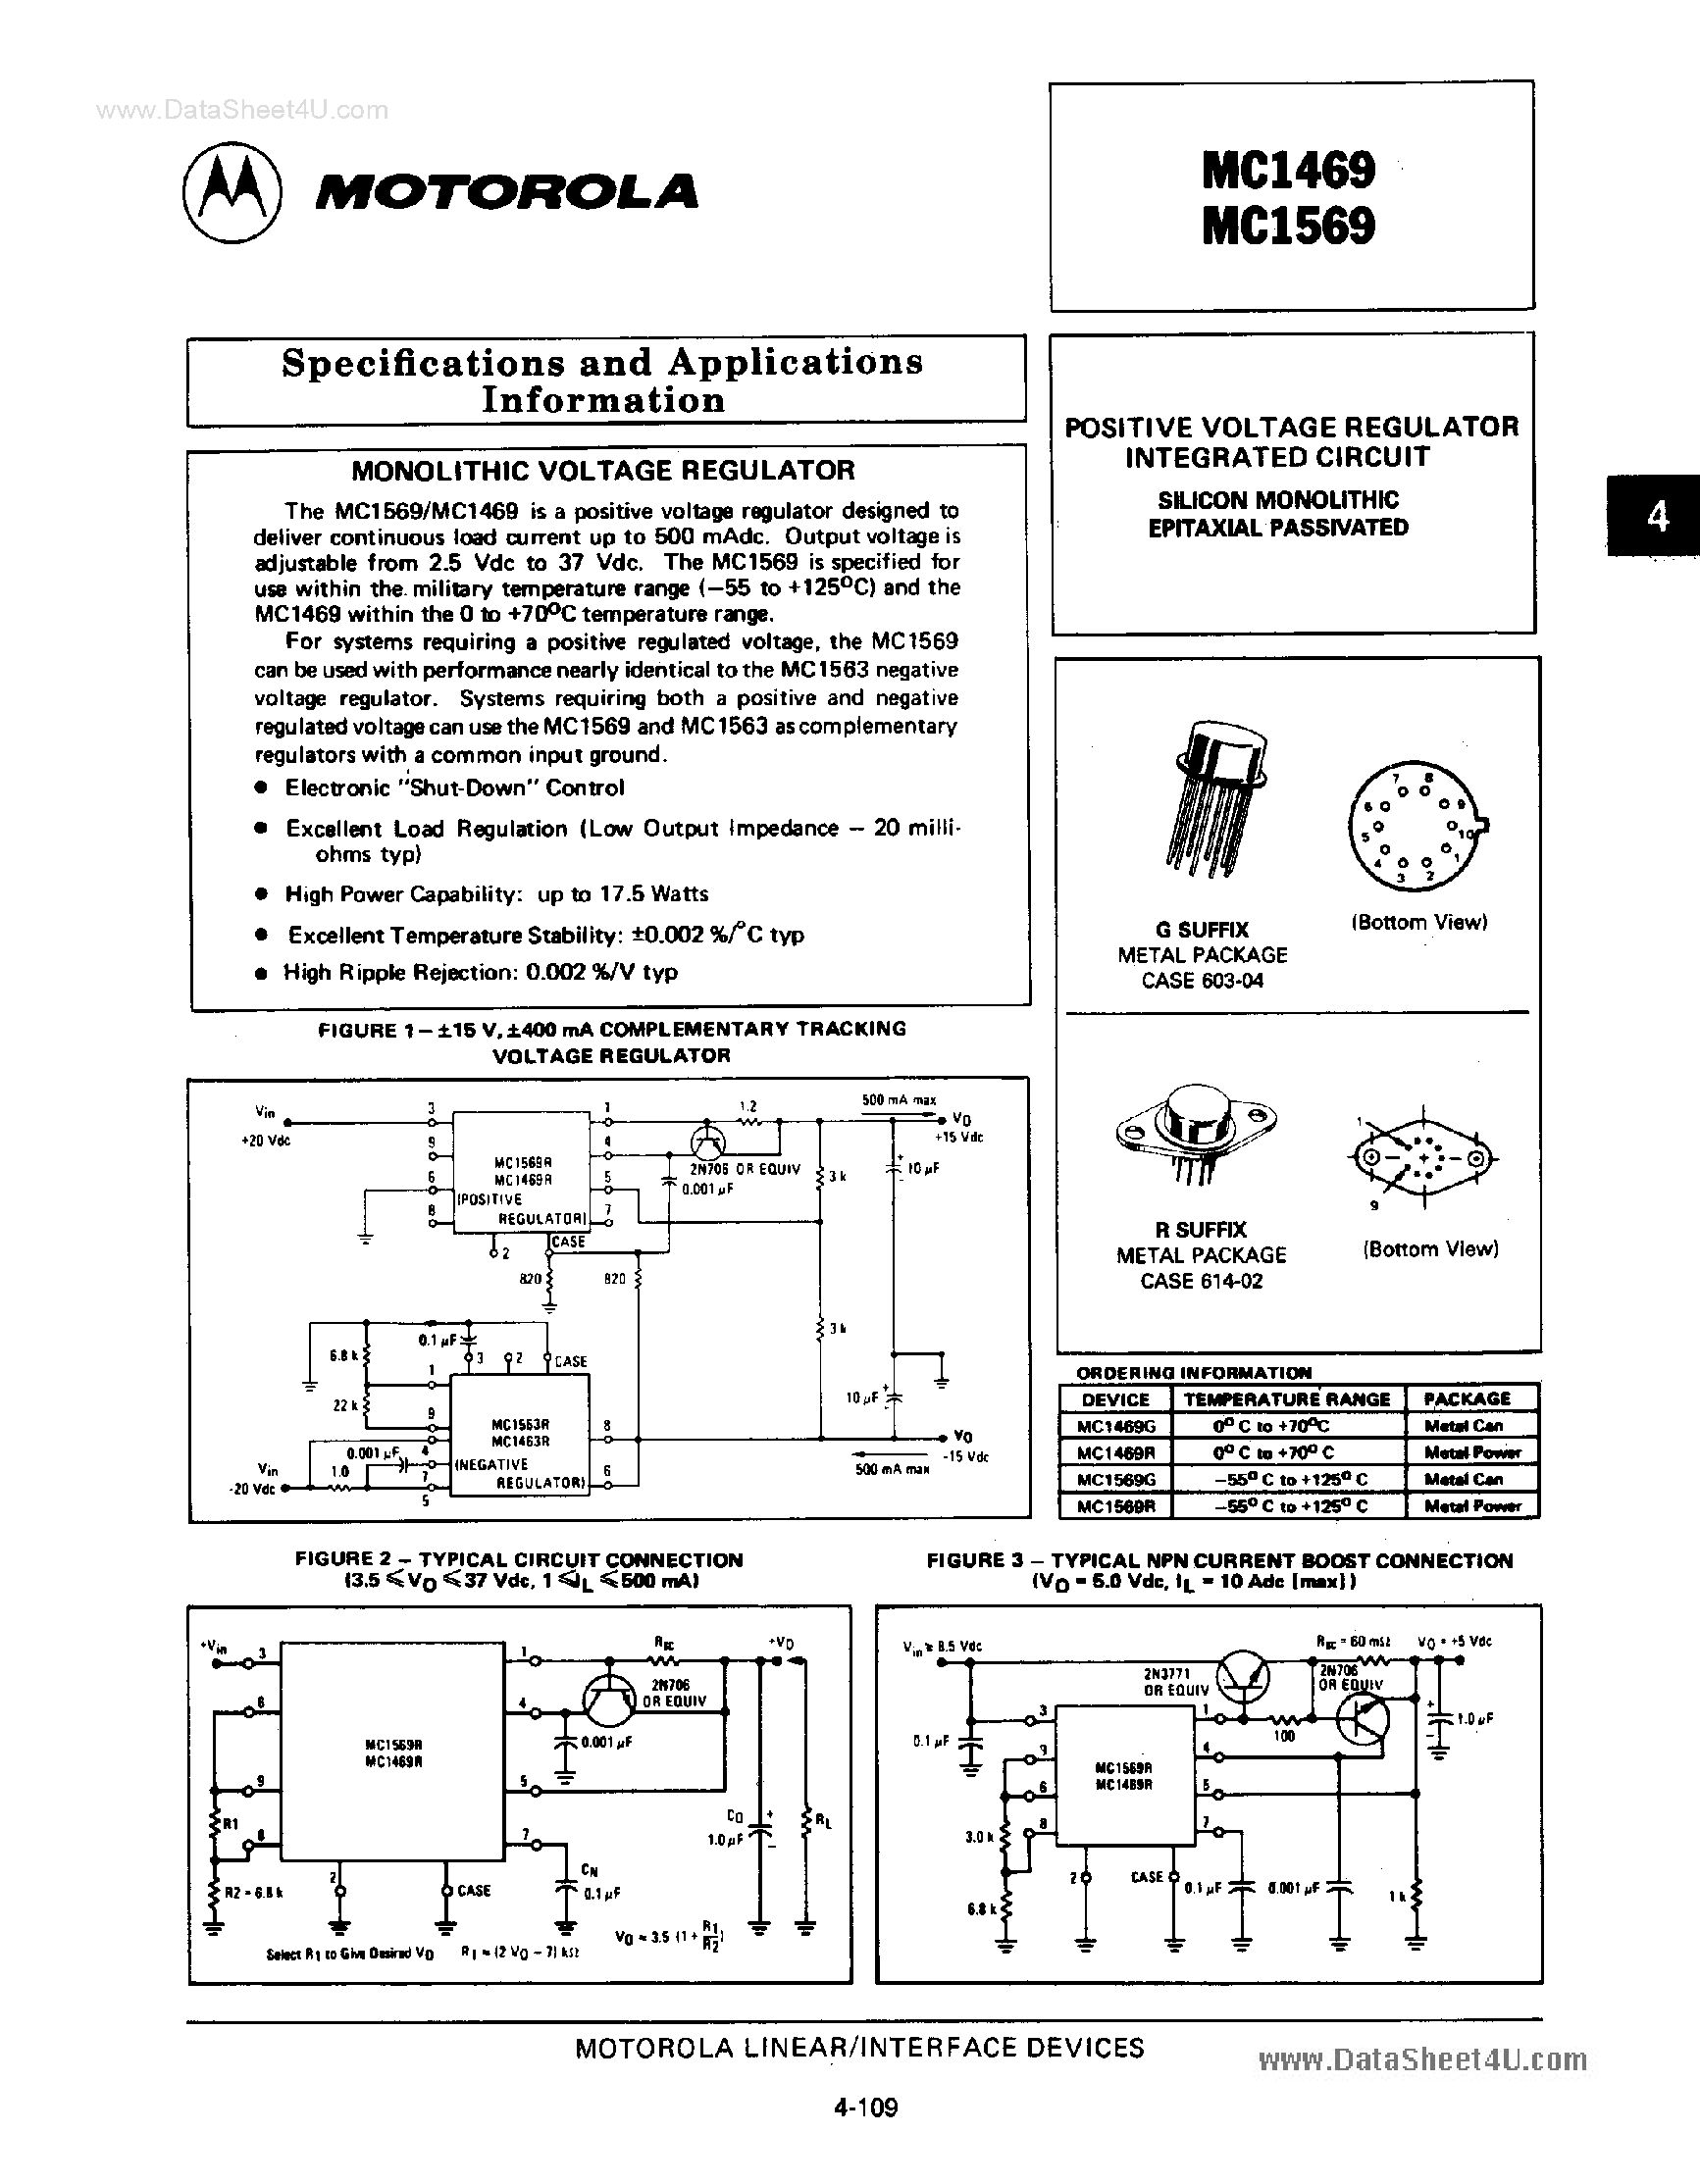 Datasheet MC1469 - (MC1469 / MC1569) positive voltage regulator page 1